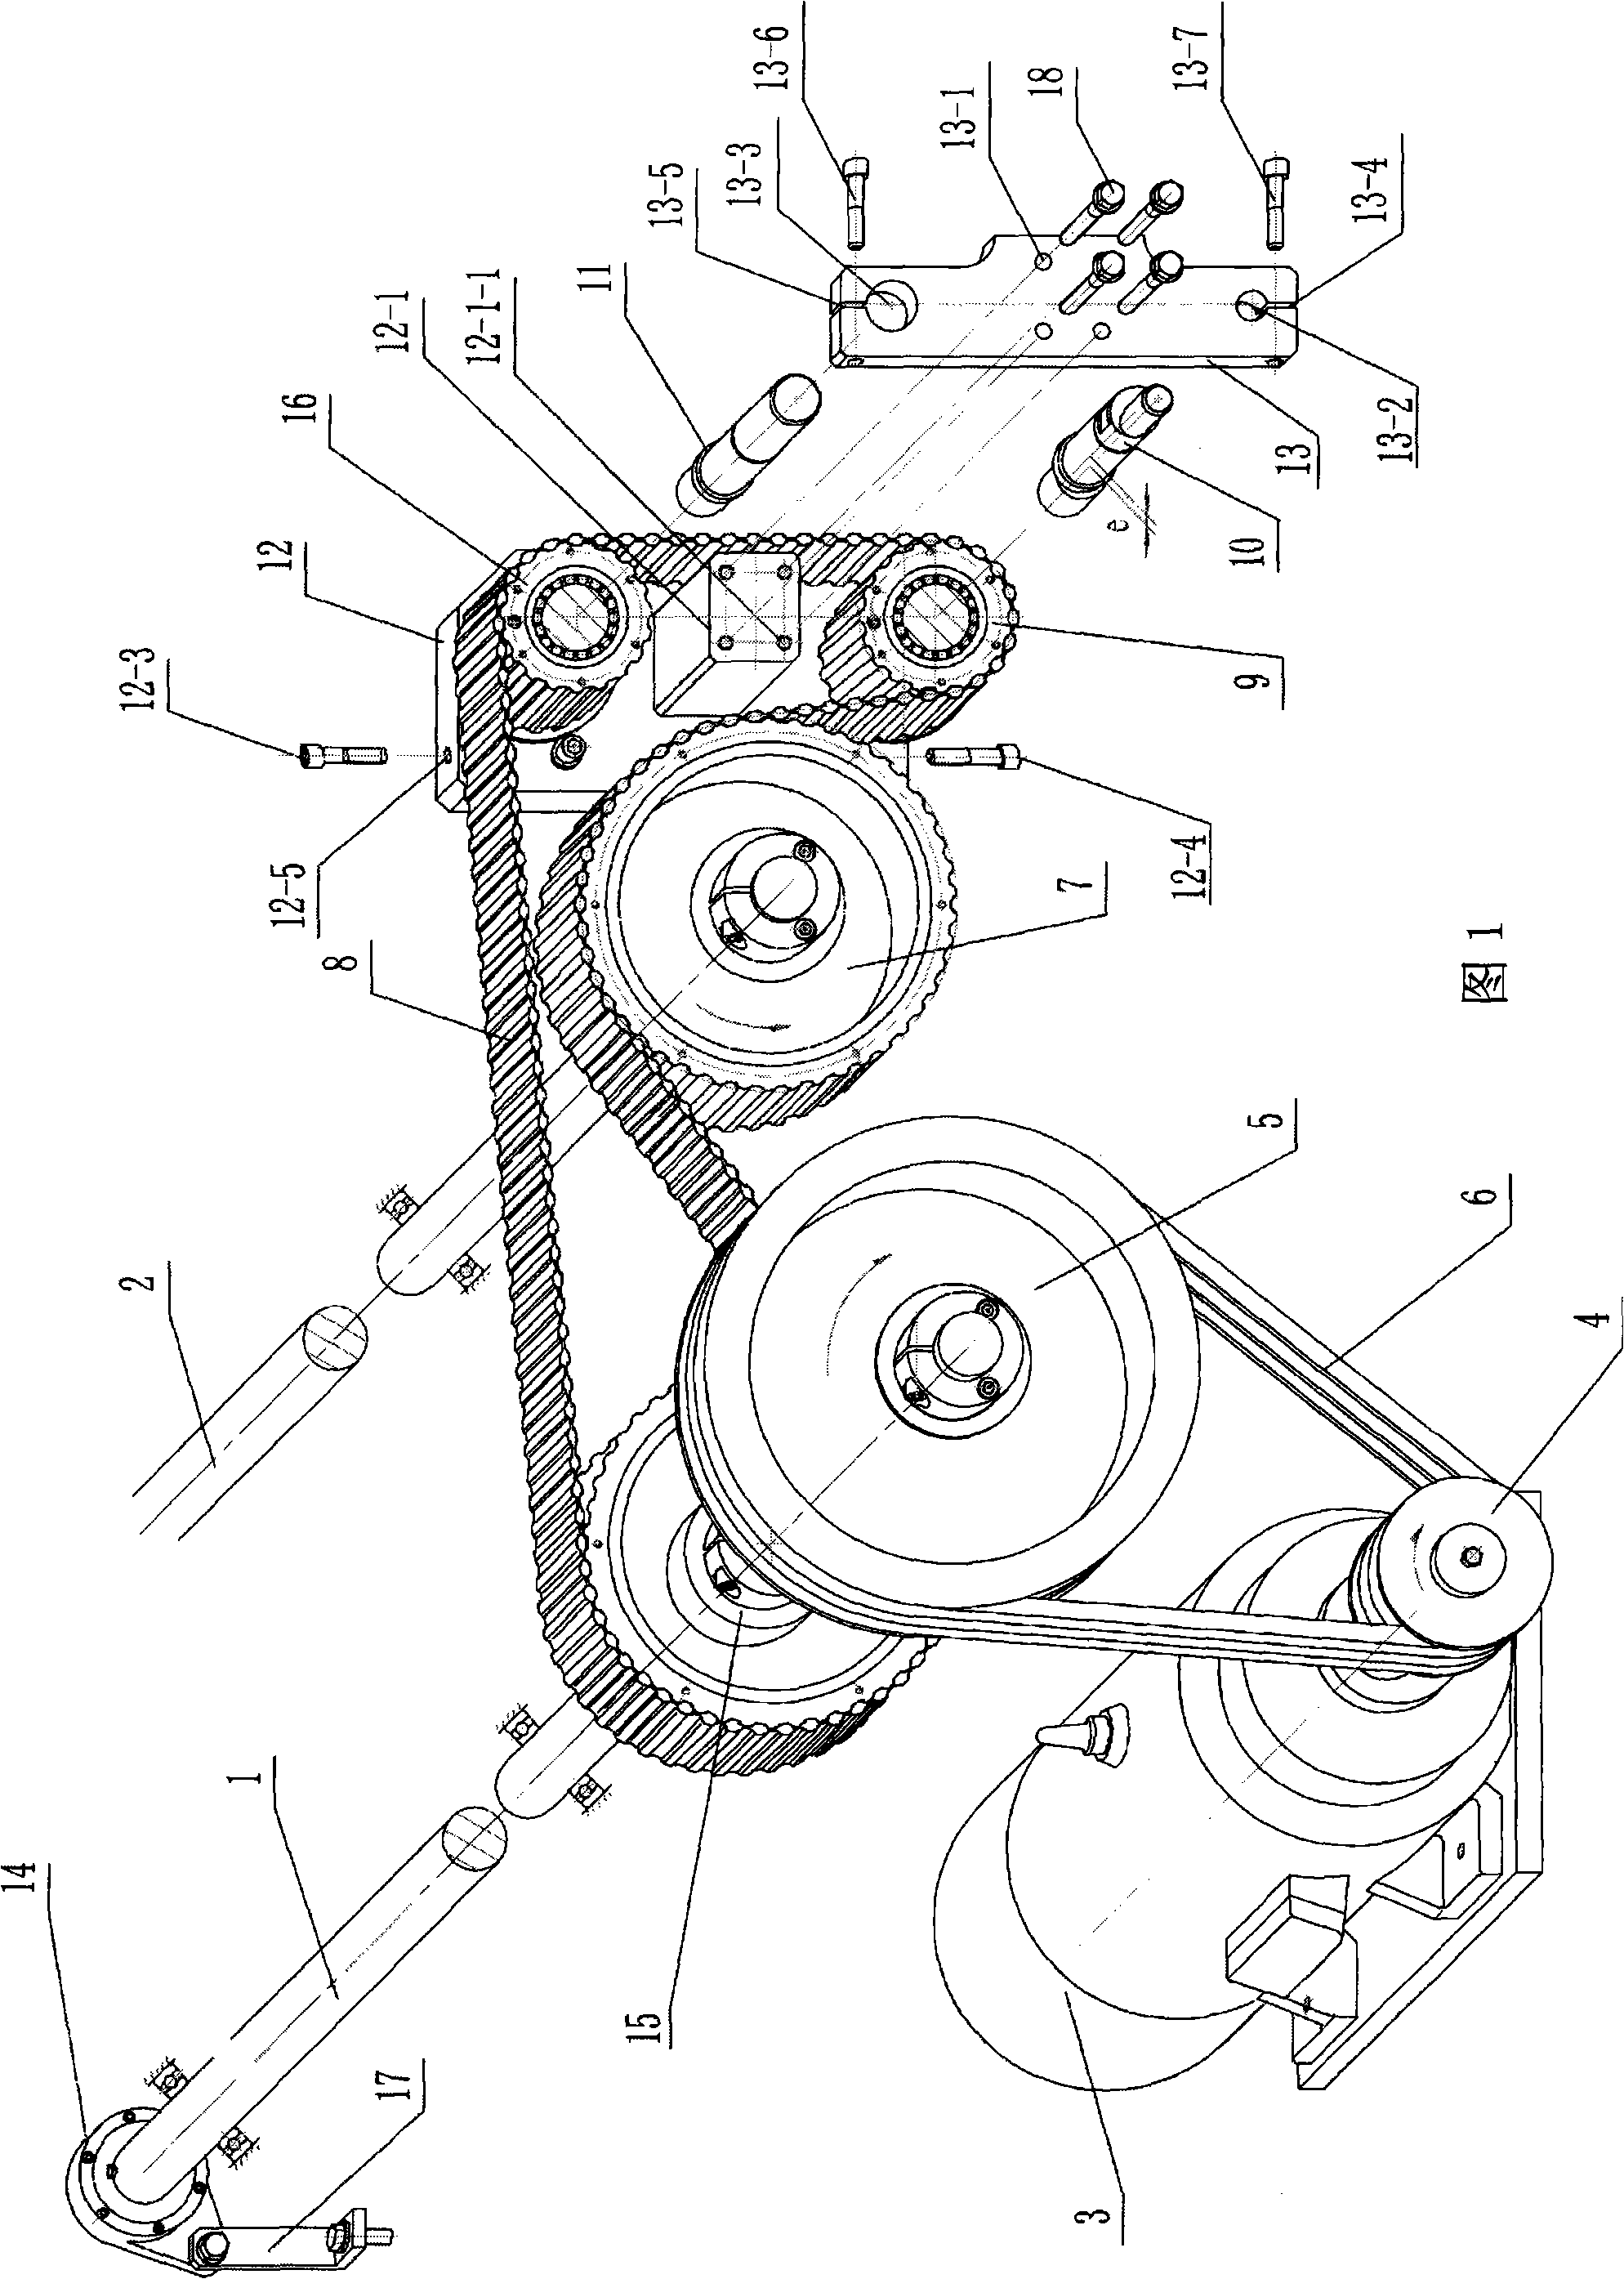 Main transmission device of double-needle warp knitting machine